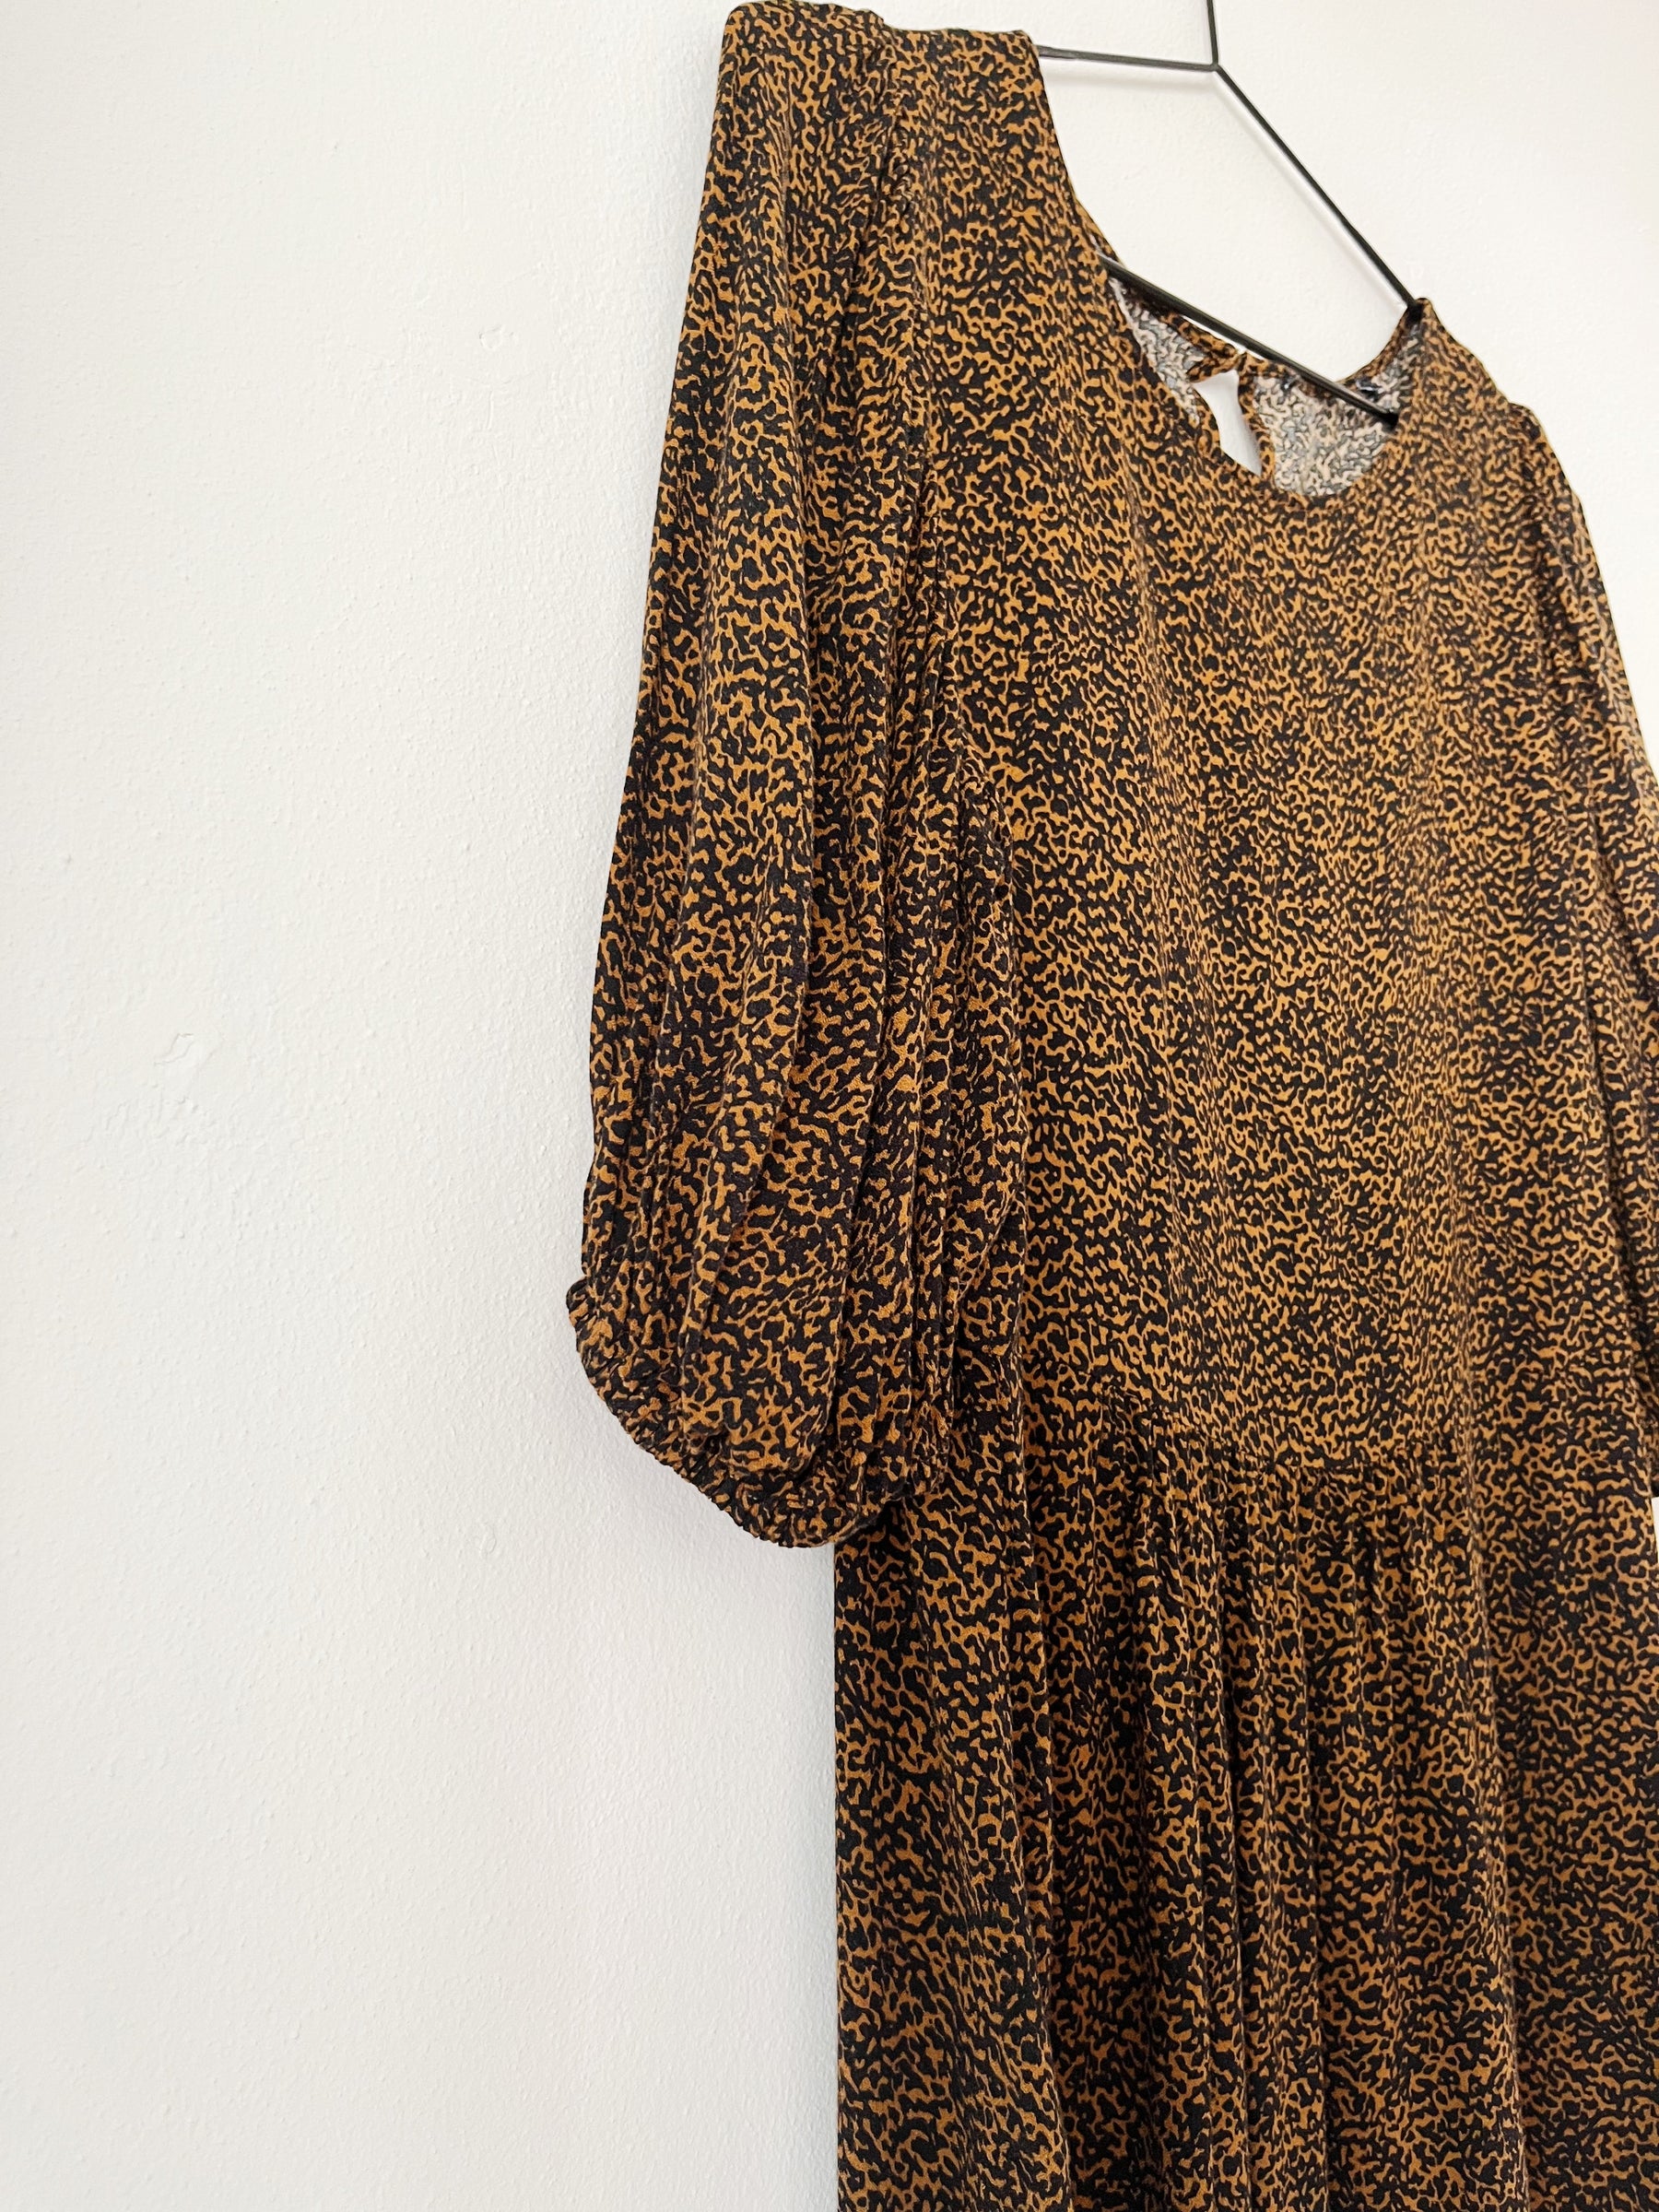 Sød leopard kjole